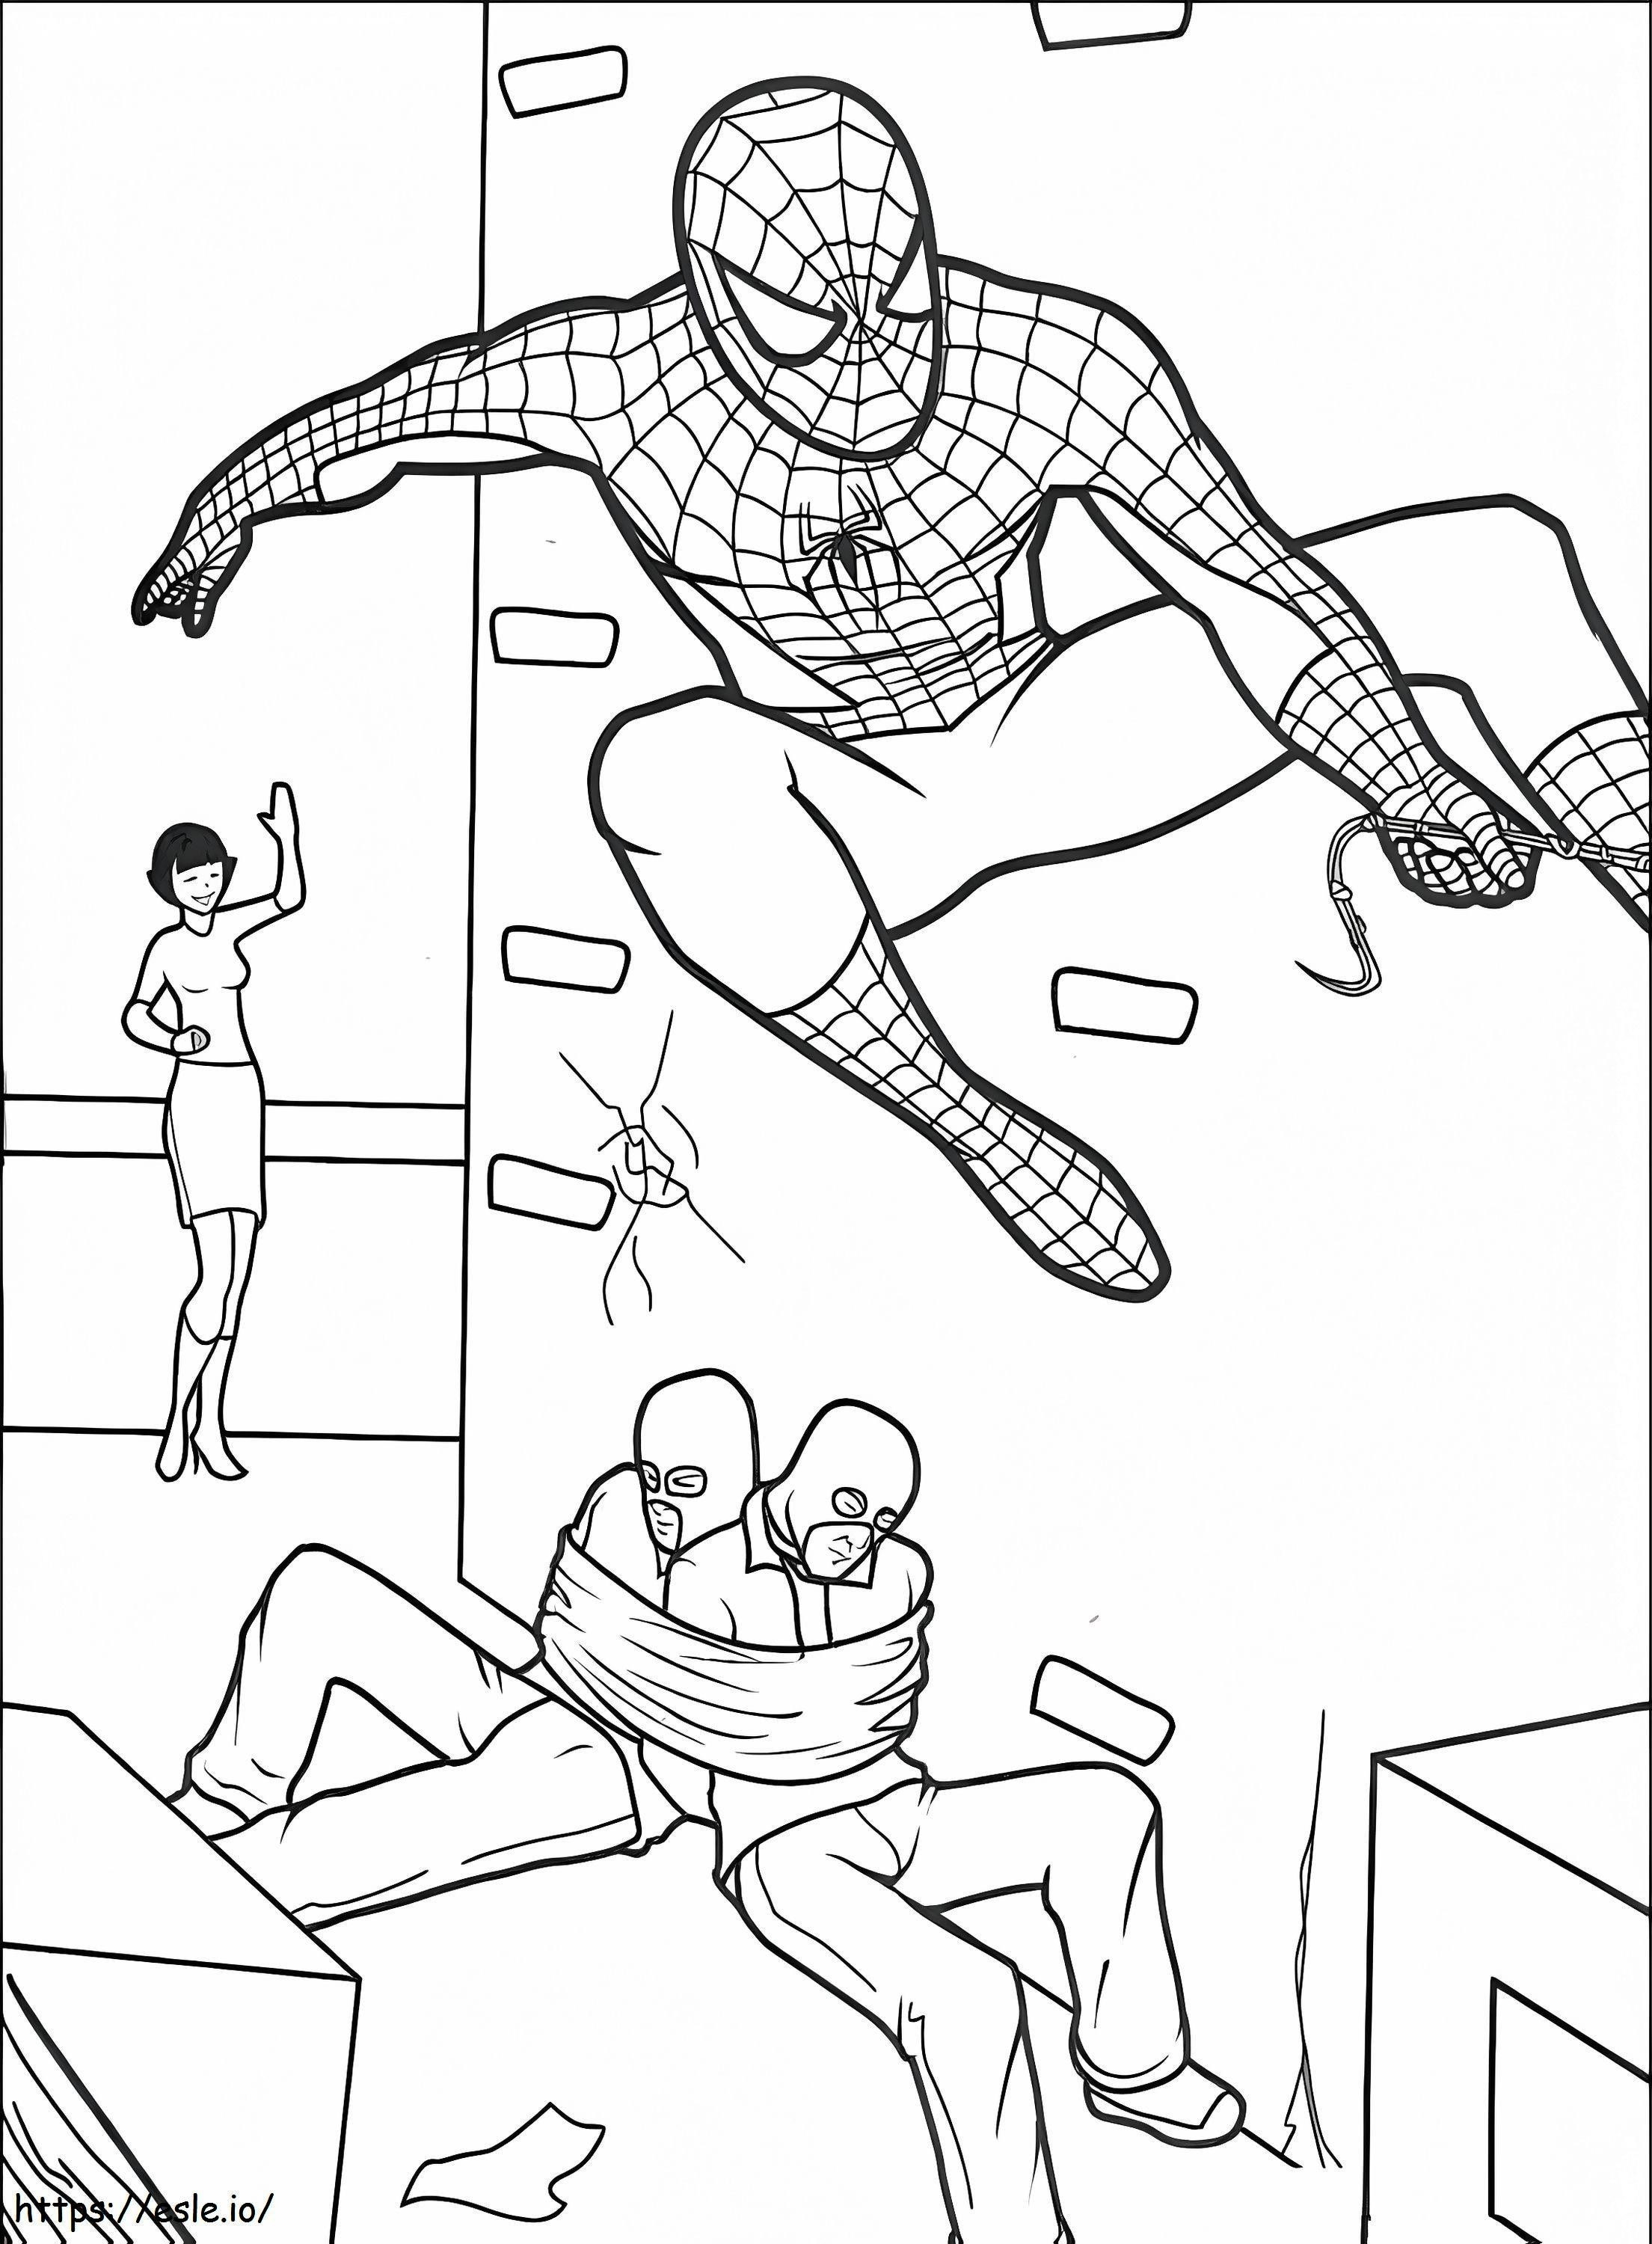 Spiderman rettet den Tag ausmalbilder